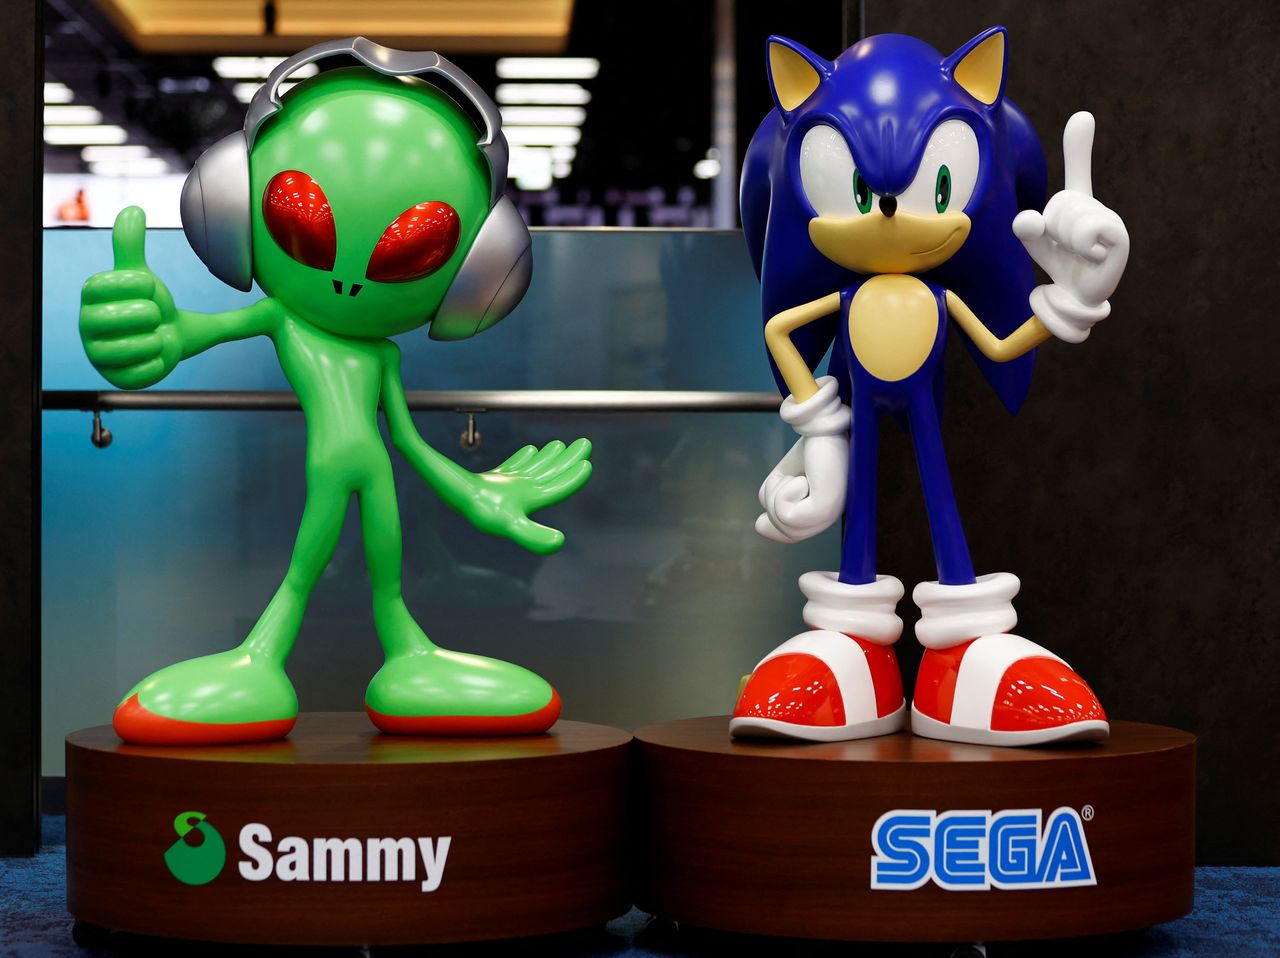 A model of Sega Sammy character 